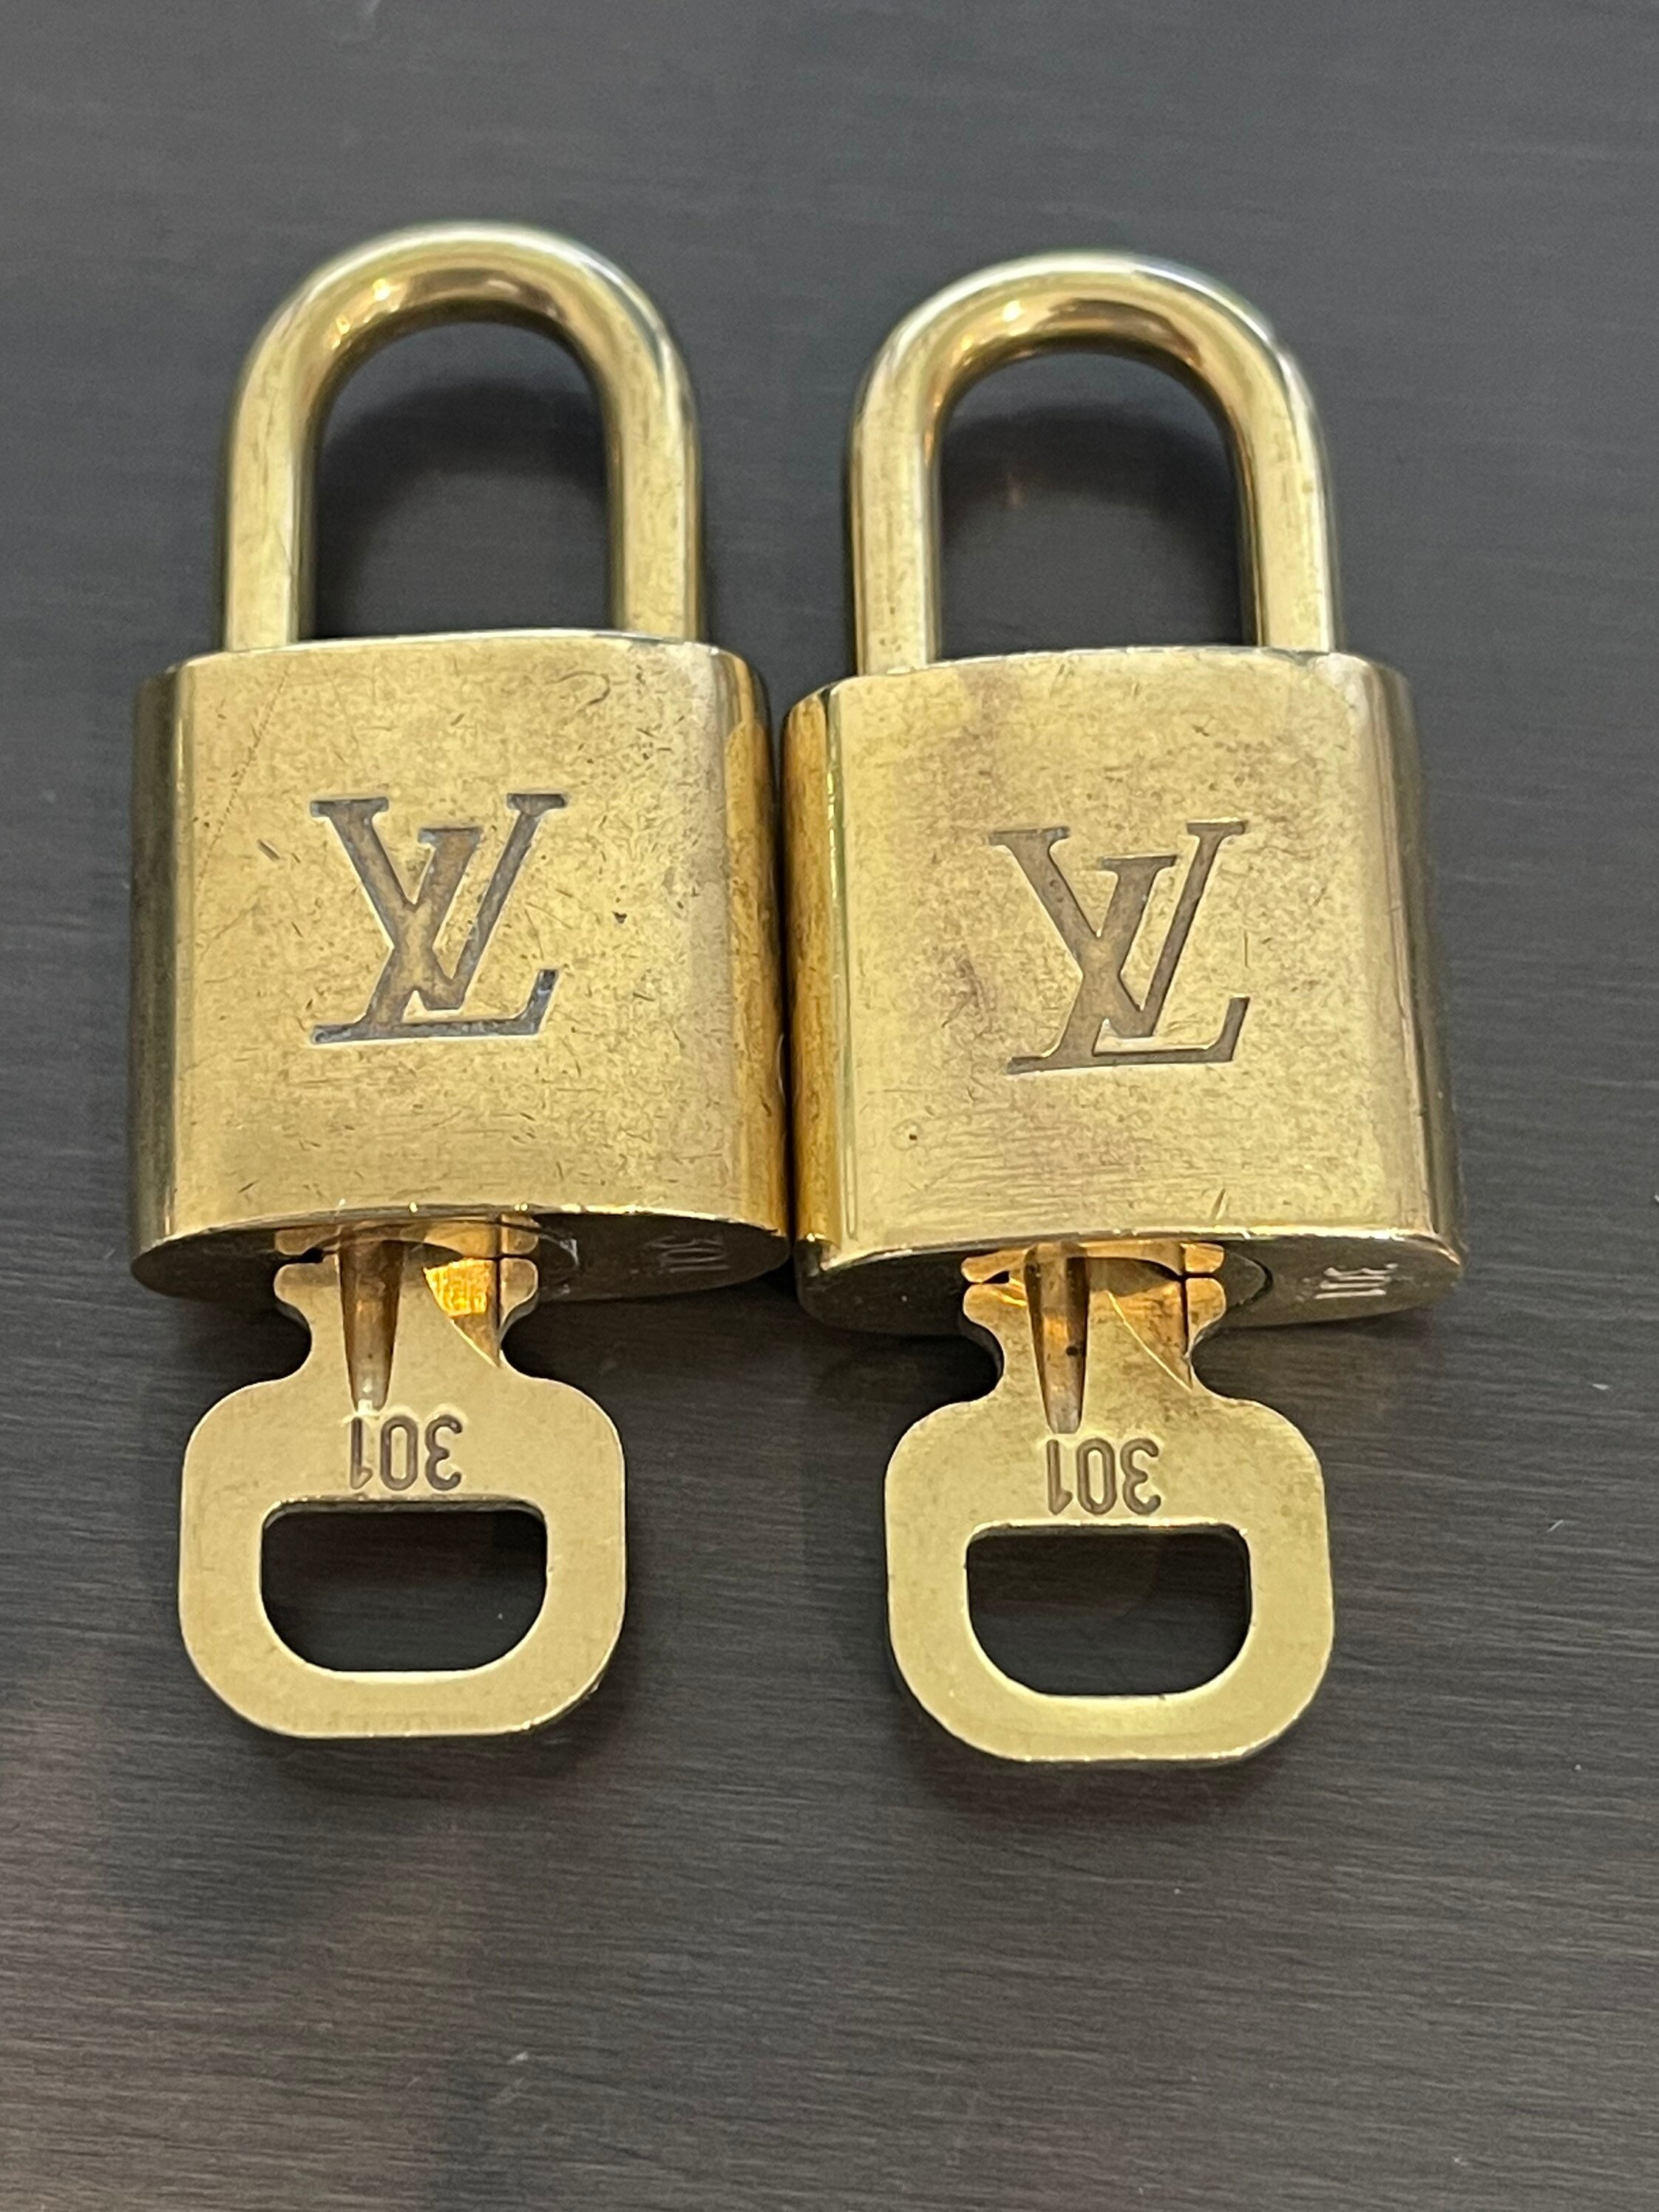 Louis Vuitton lock with key No. 301 - I Love Handbags